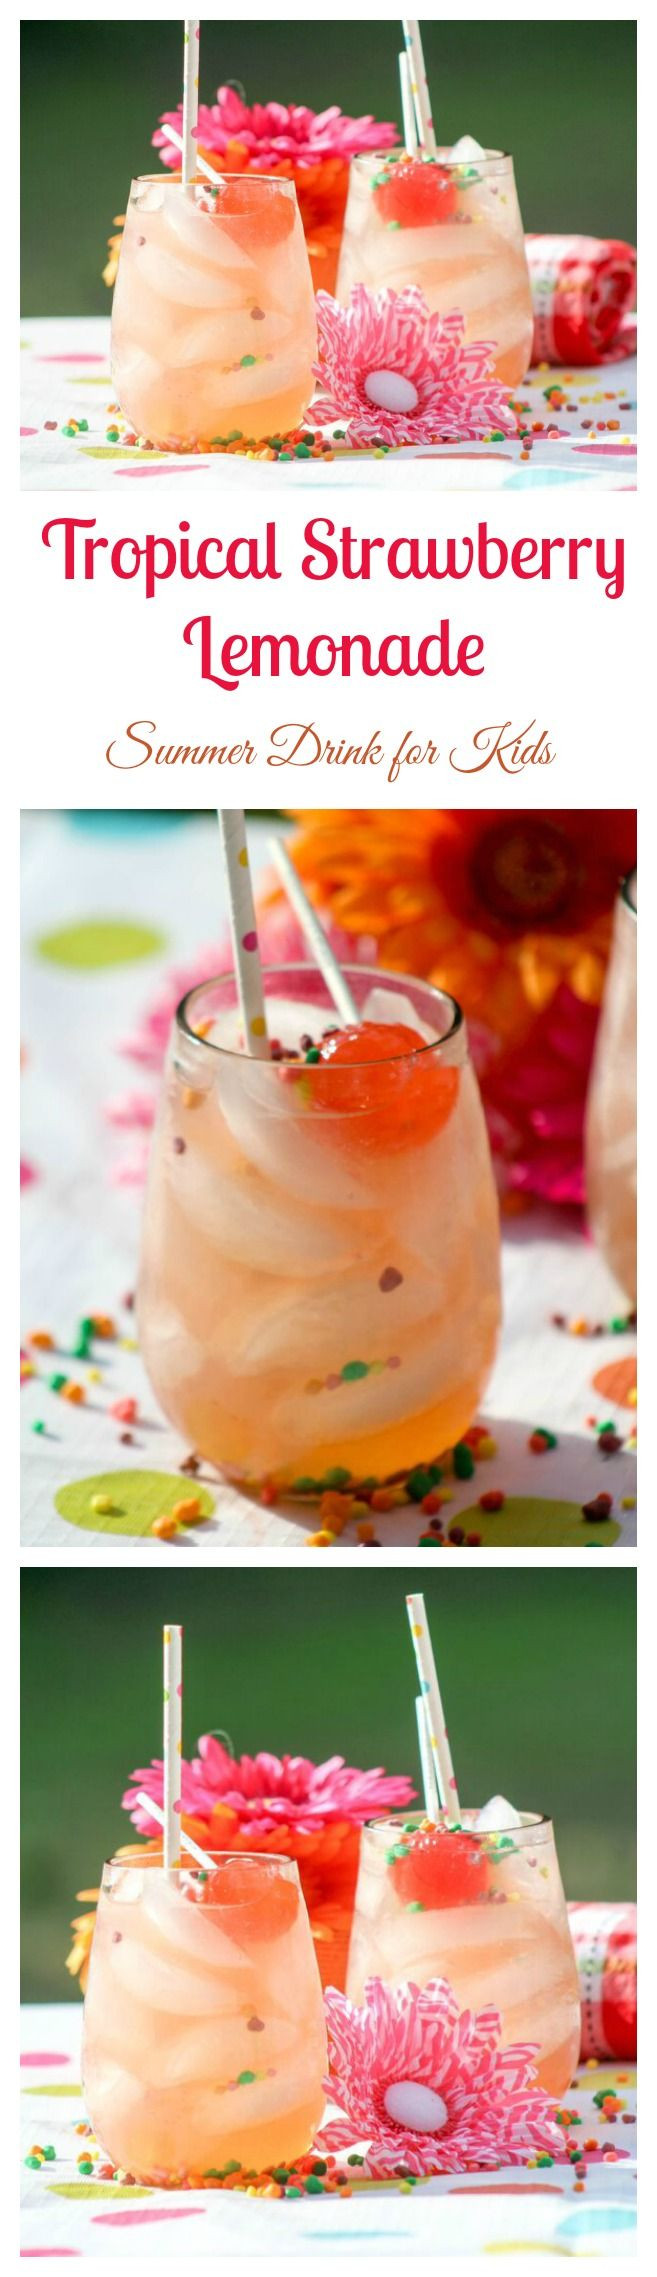 Lemonade Recipes For Kids
 Tropical Strawberry Lemonade Summer Drink Recipe for Kids